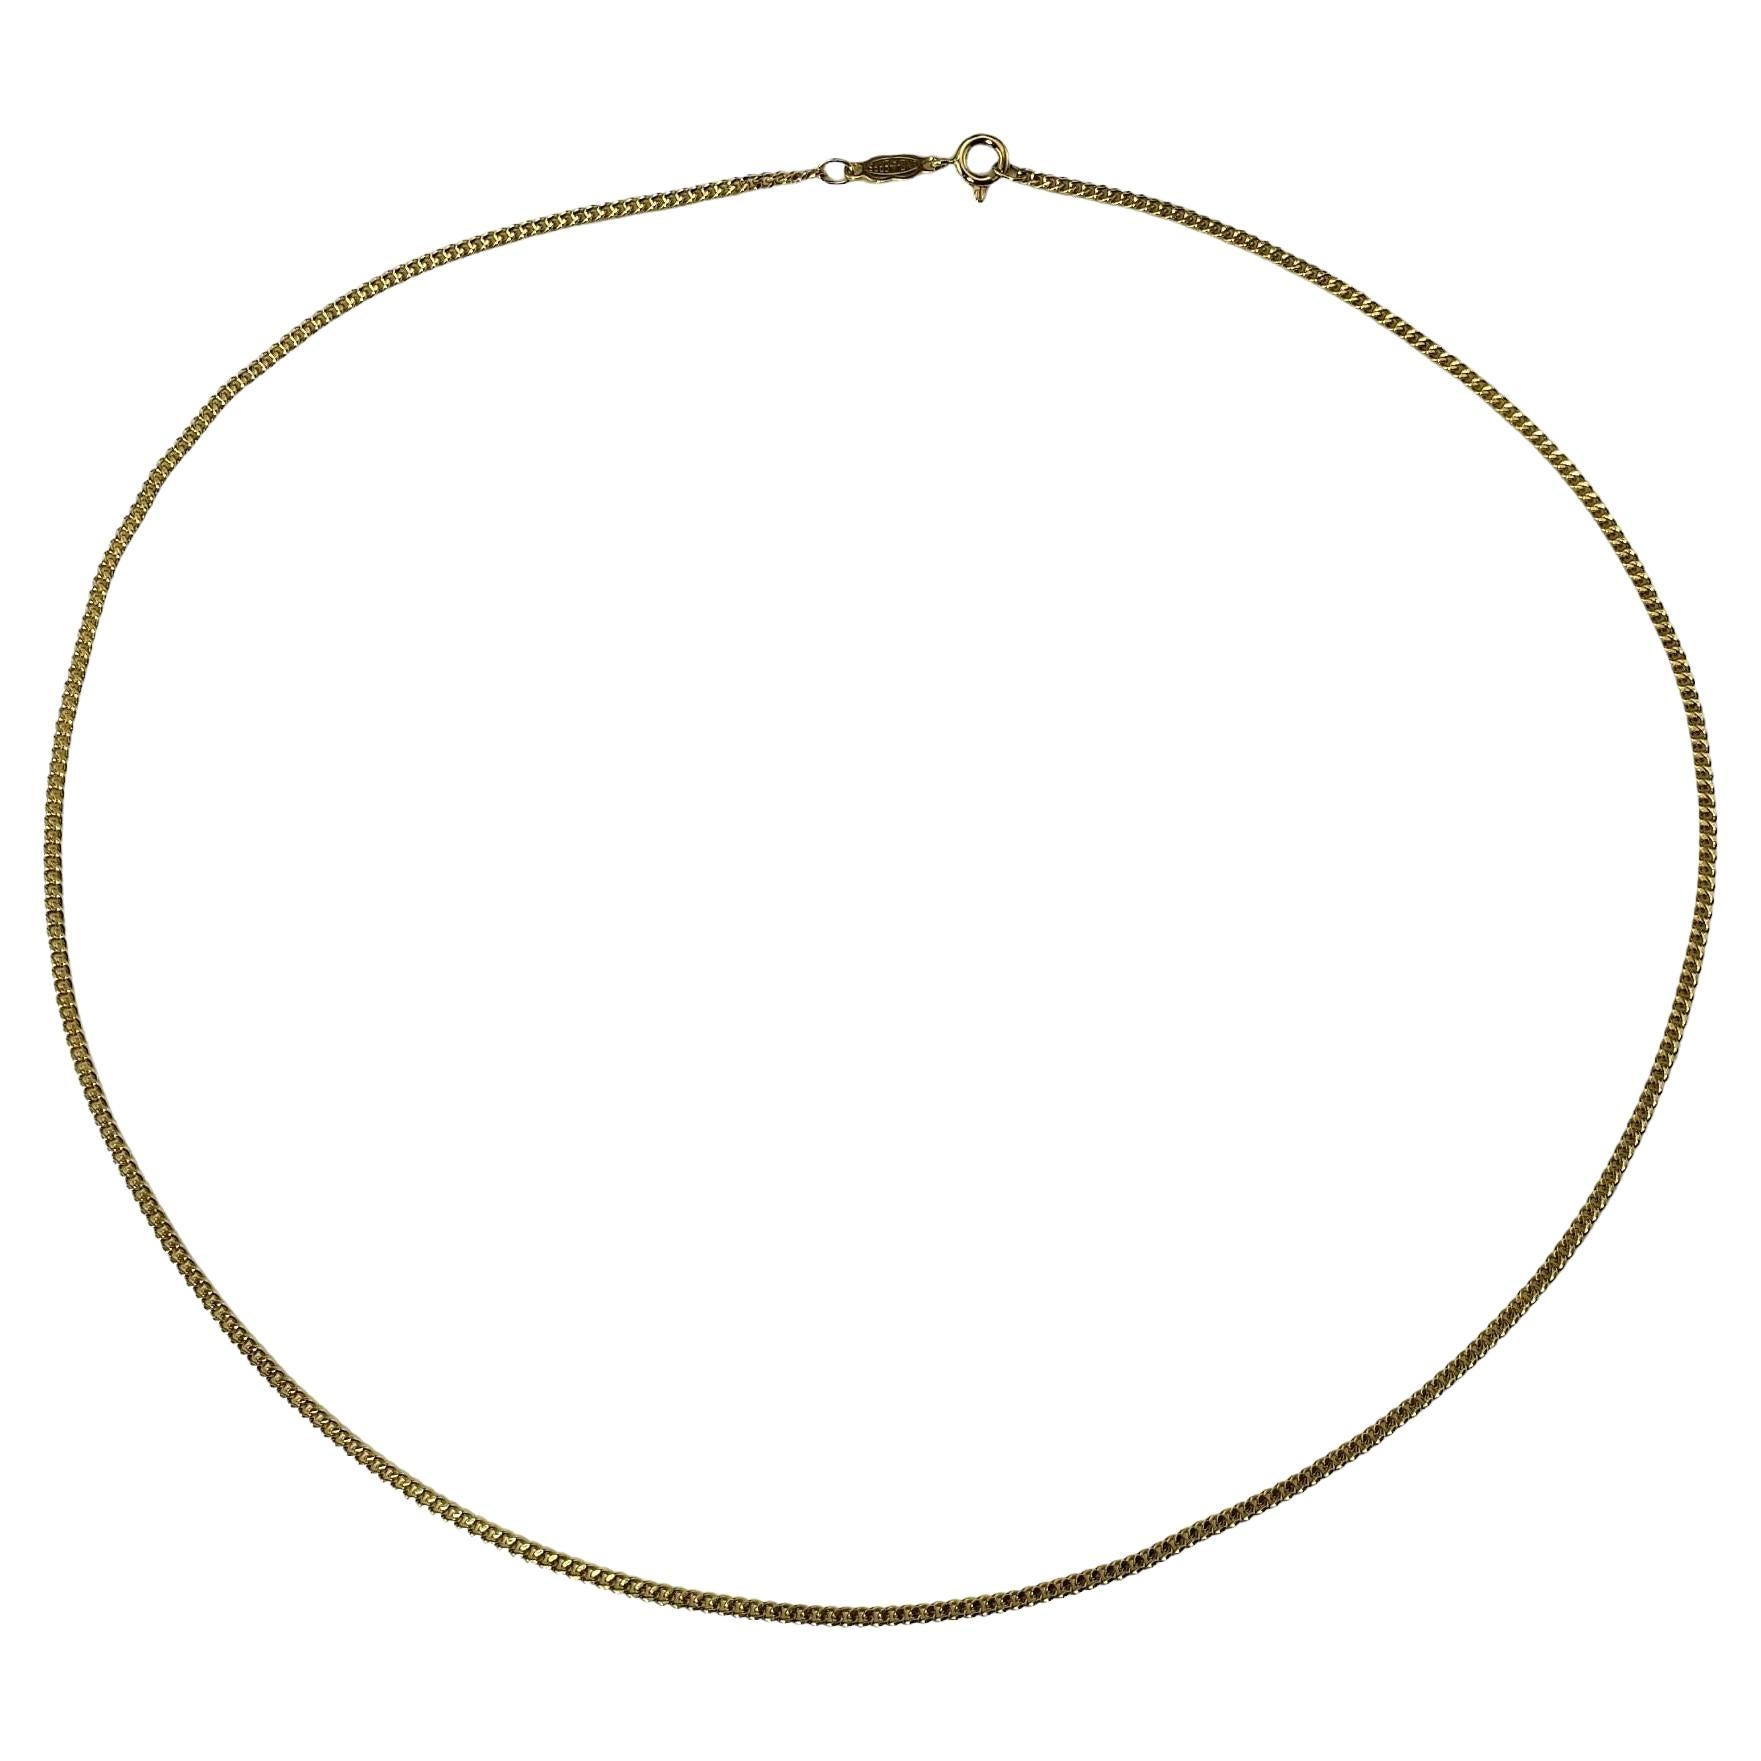  18 Karat Yellow Gold Link Chain Necklace #15608